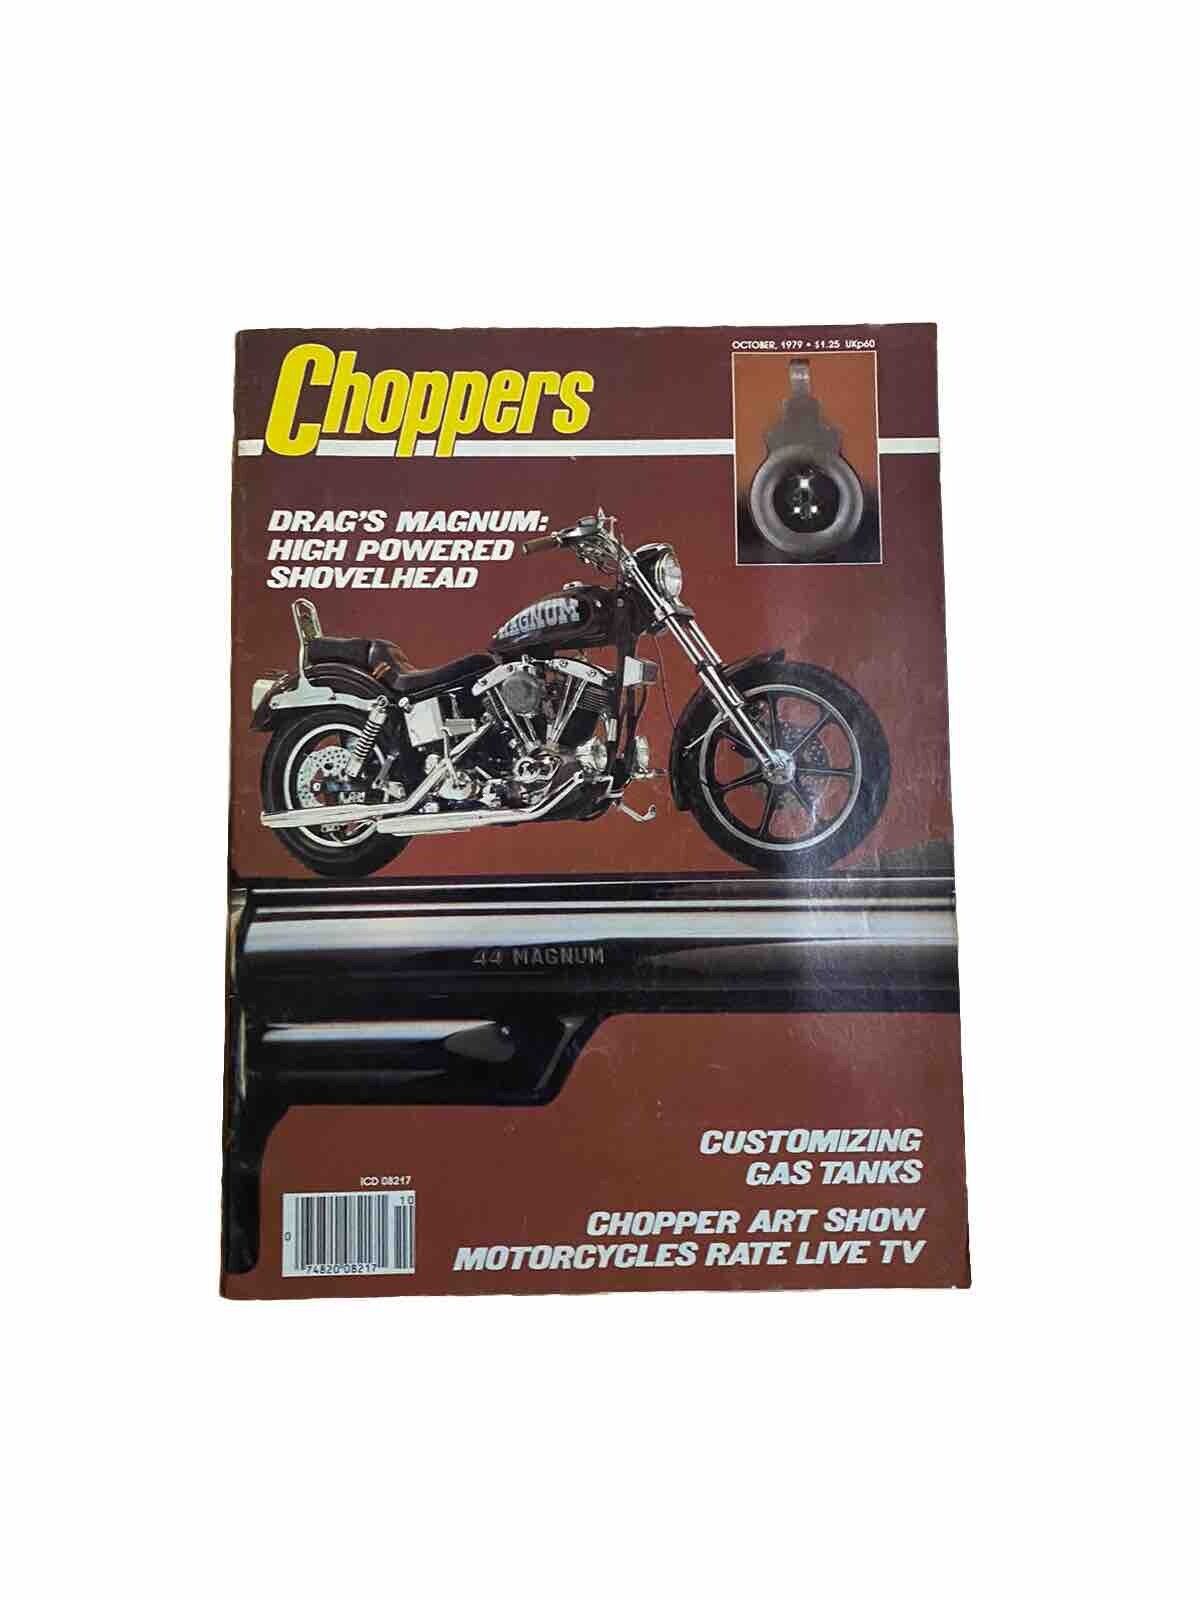 Vintage choppers magazine October 1979